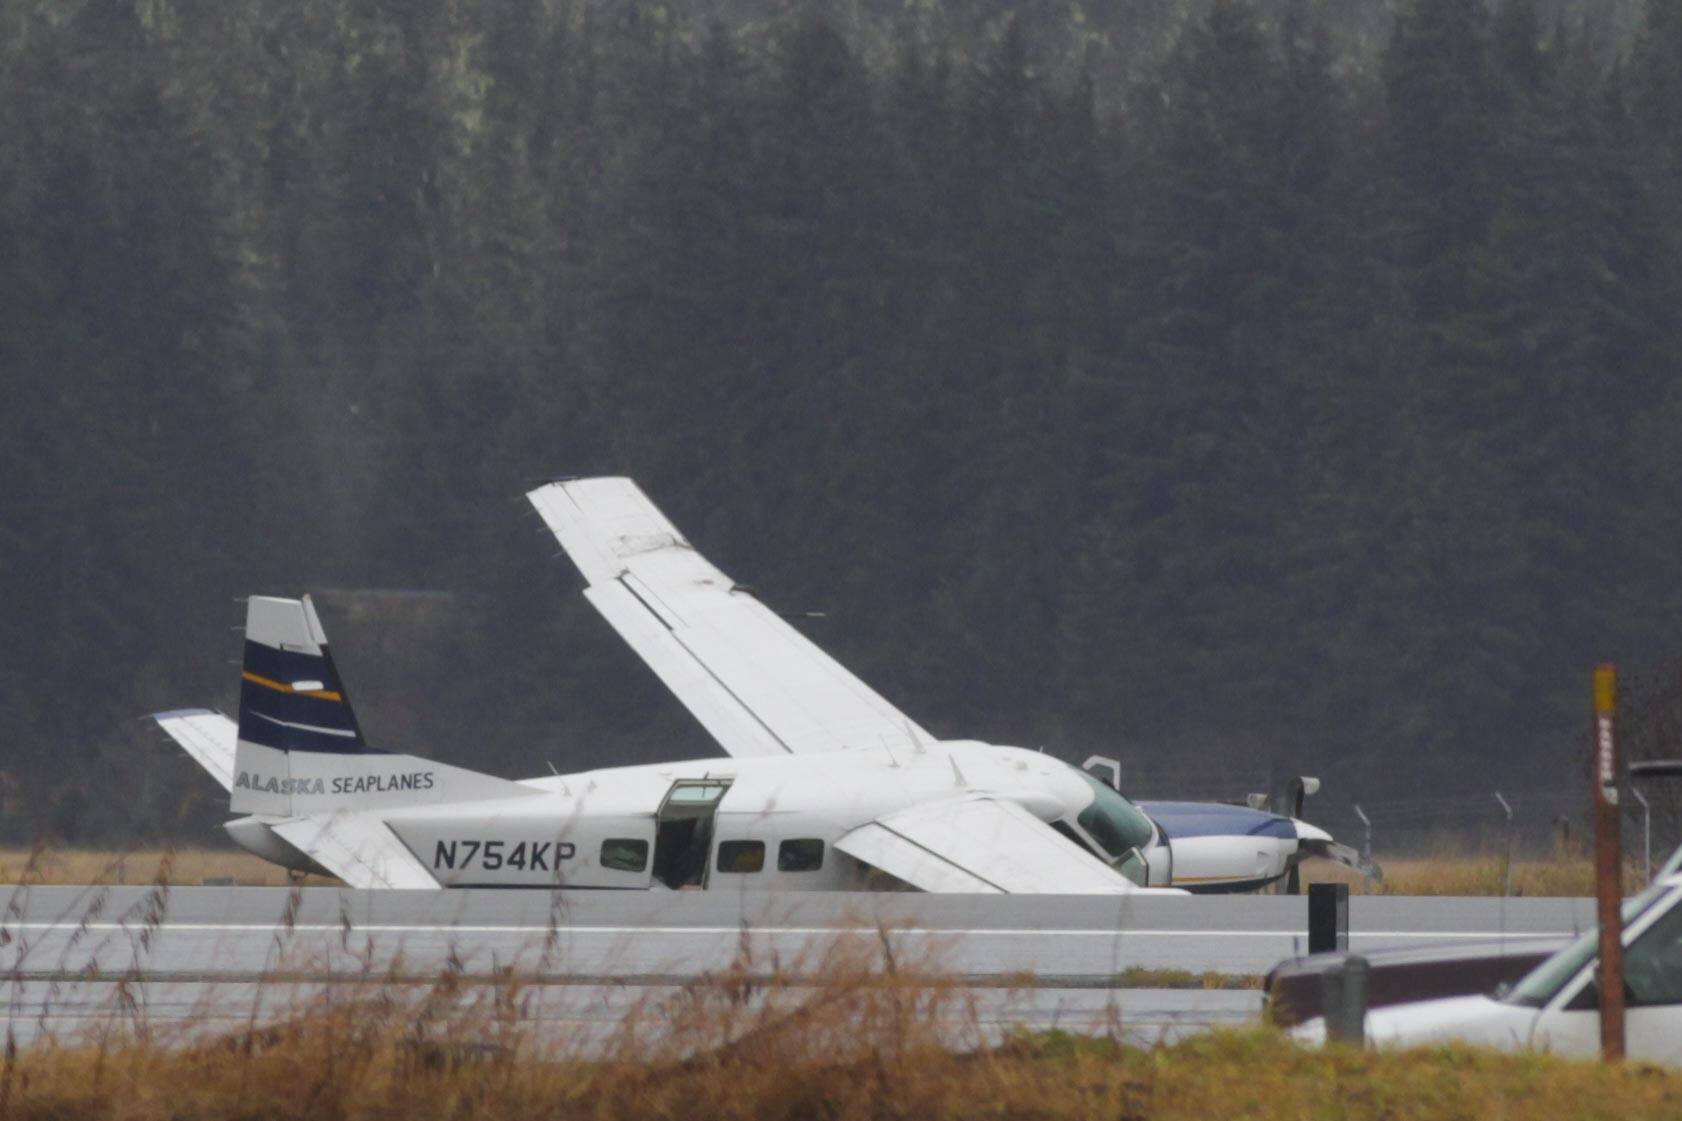 An Alaska Seaplanes aircraft bound for Skagway crashed during takeoff from Juneau International Airport on Oct. 22, 2021. (Michael S. Lockett / Juneau Empire)